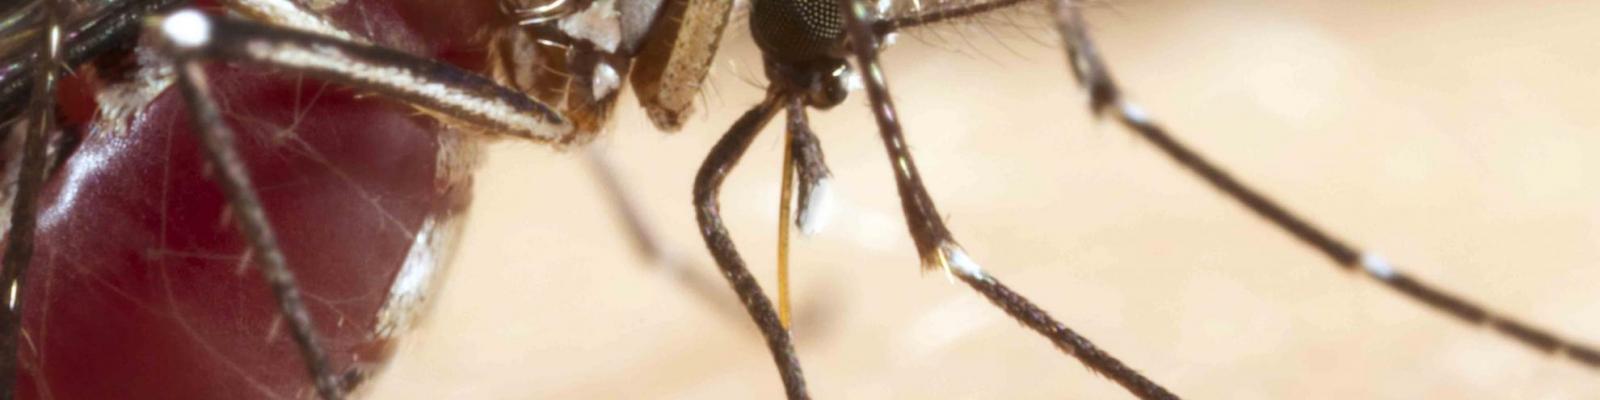 Female mosquito feeding